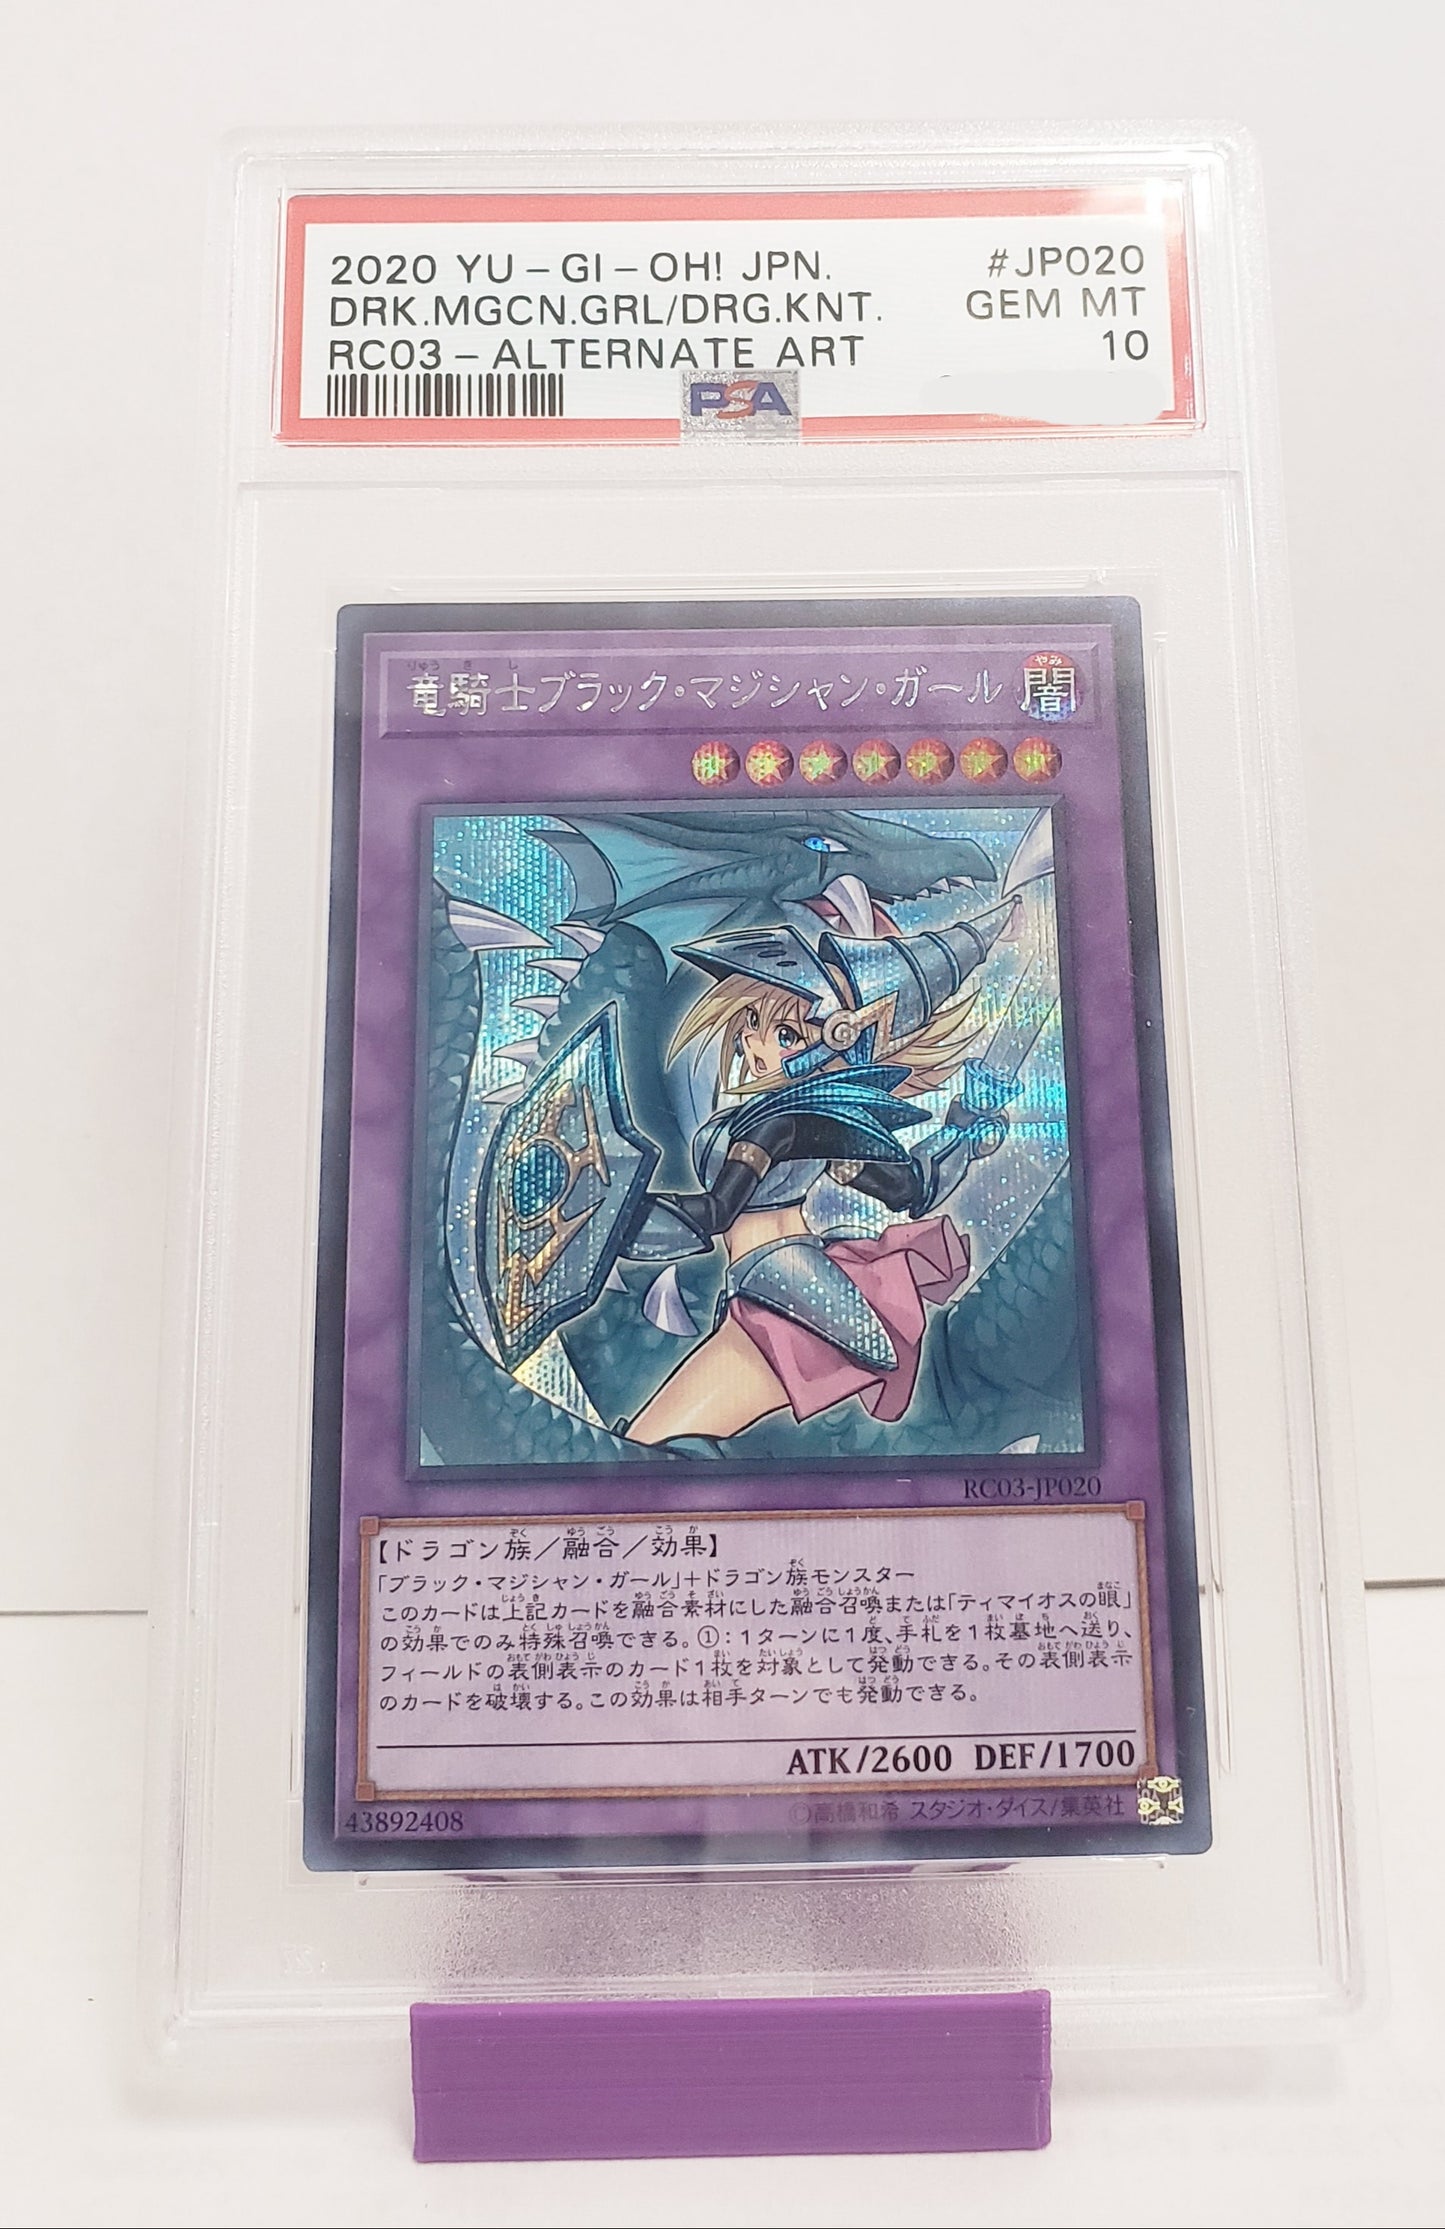 Dark Magician Girl The Dragon Knight (RC03-JP020), Japanese, PSA 10